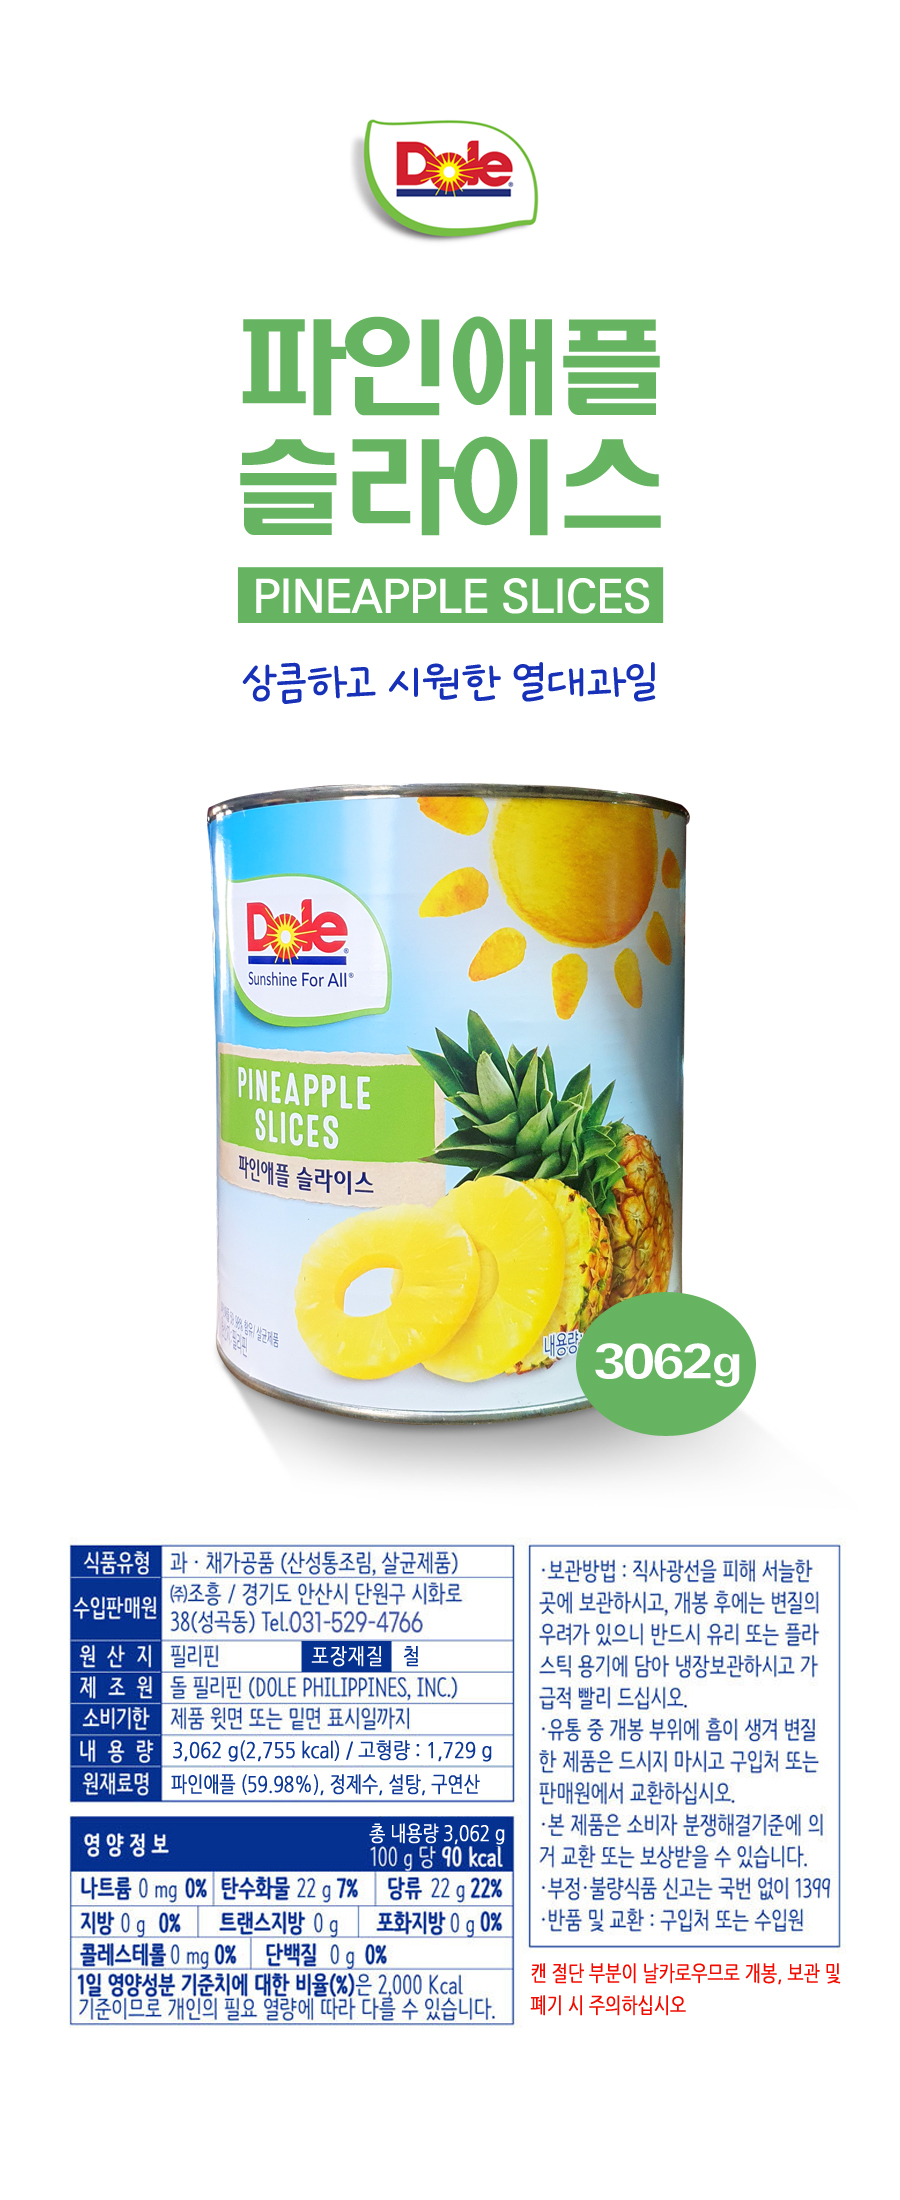 dole_pineapple_slice_3062g